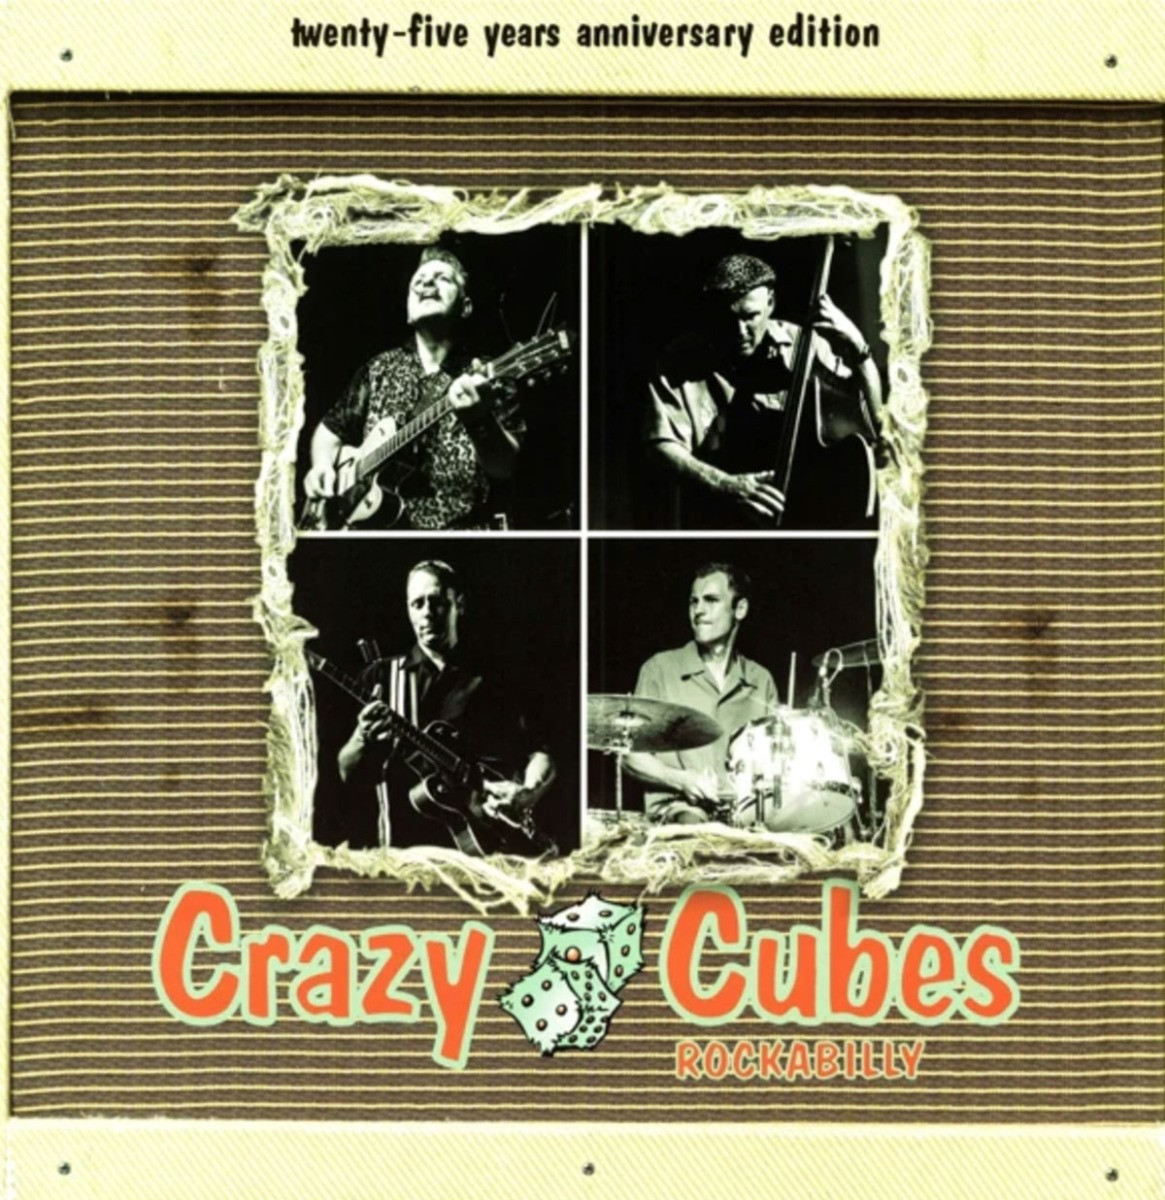 Crazy Cubes - Rockabilly 25 Years LP